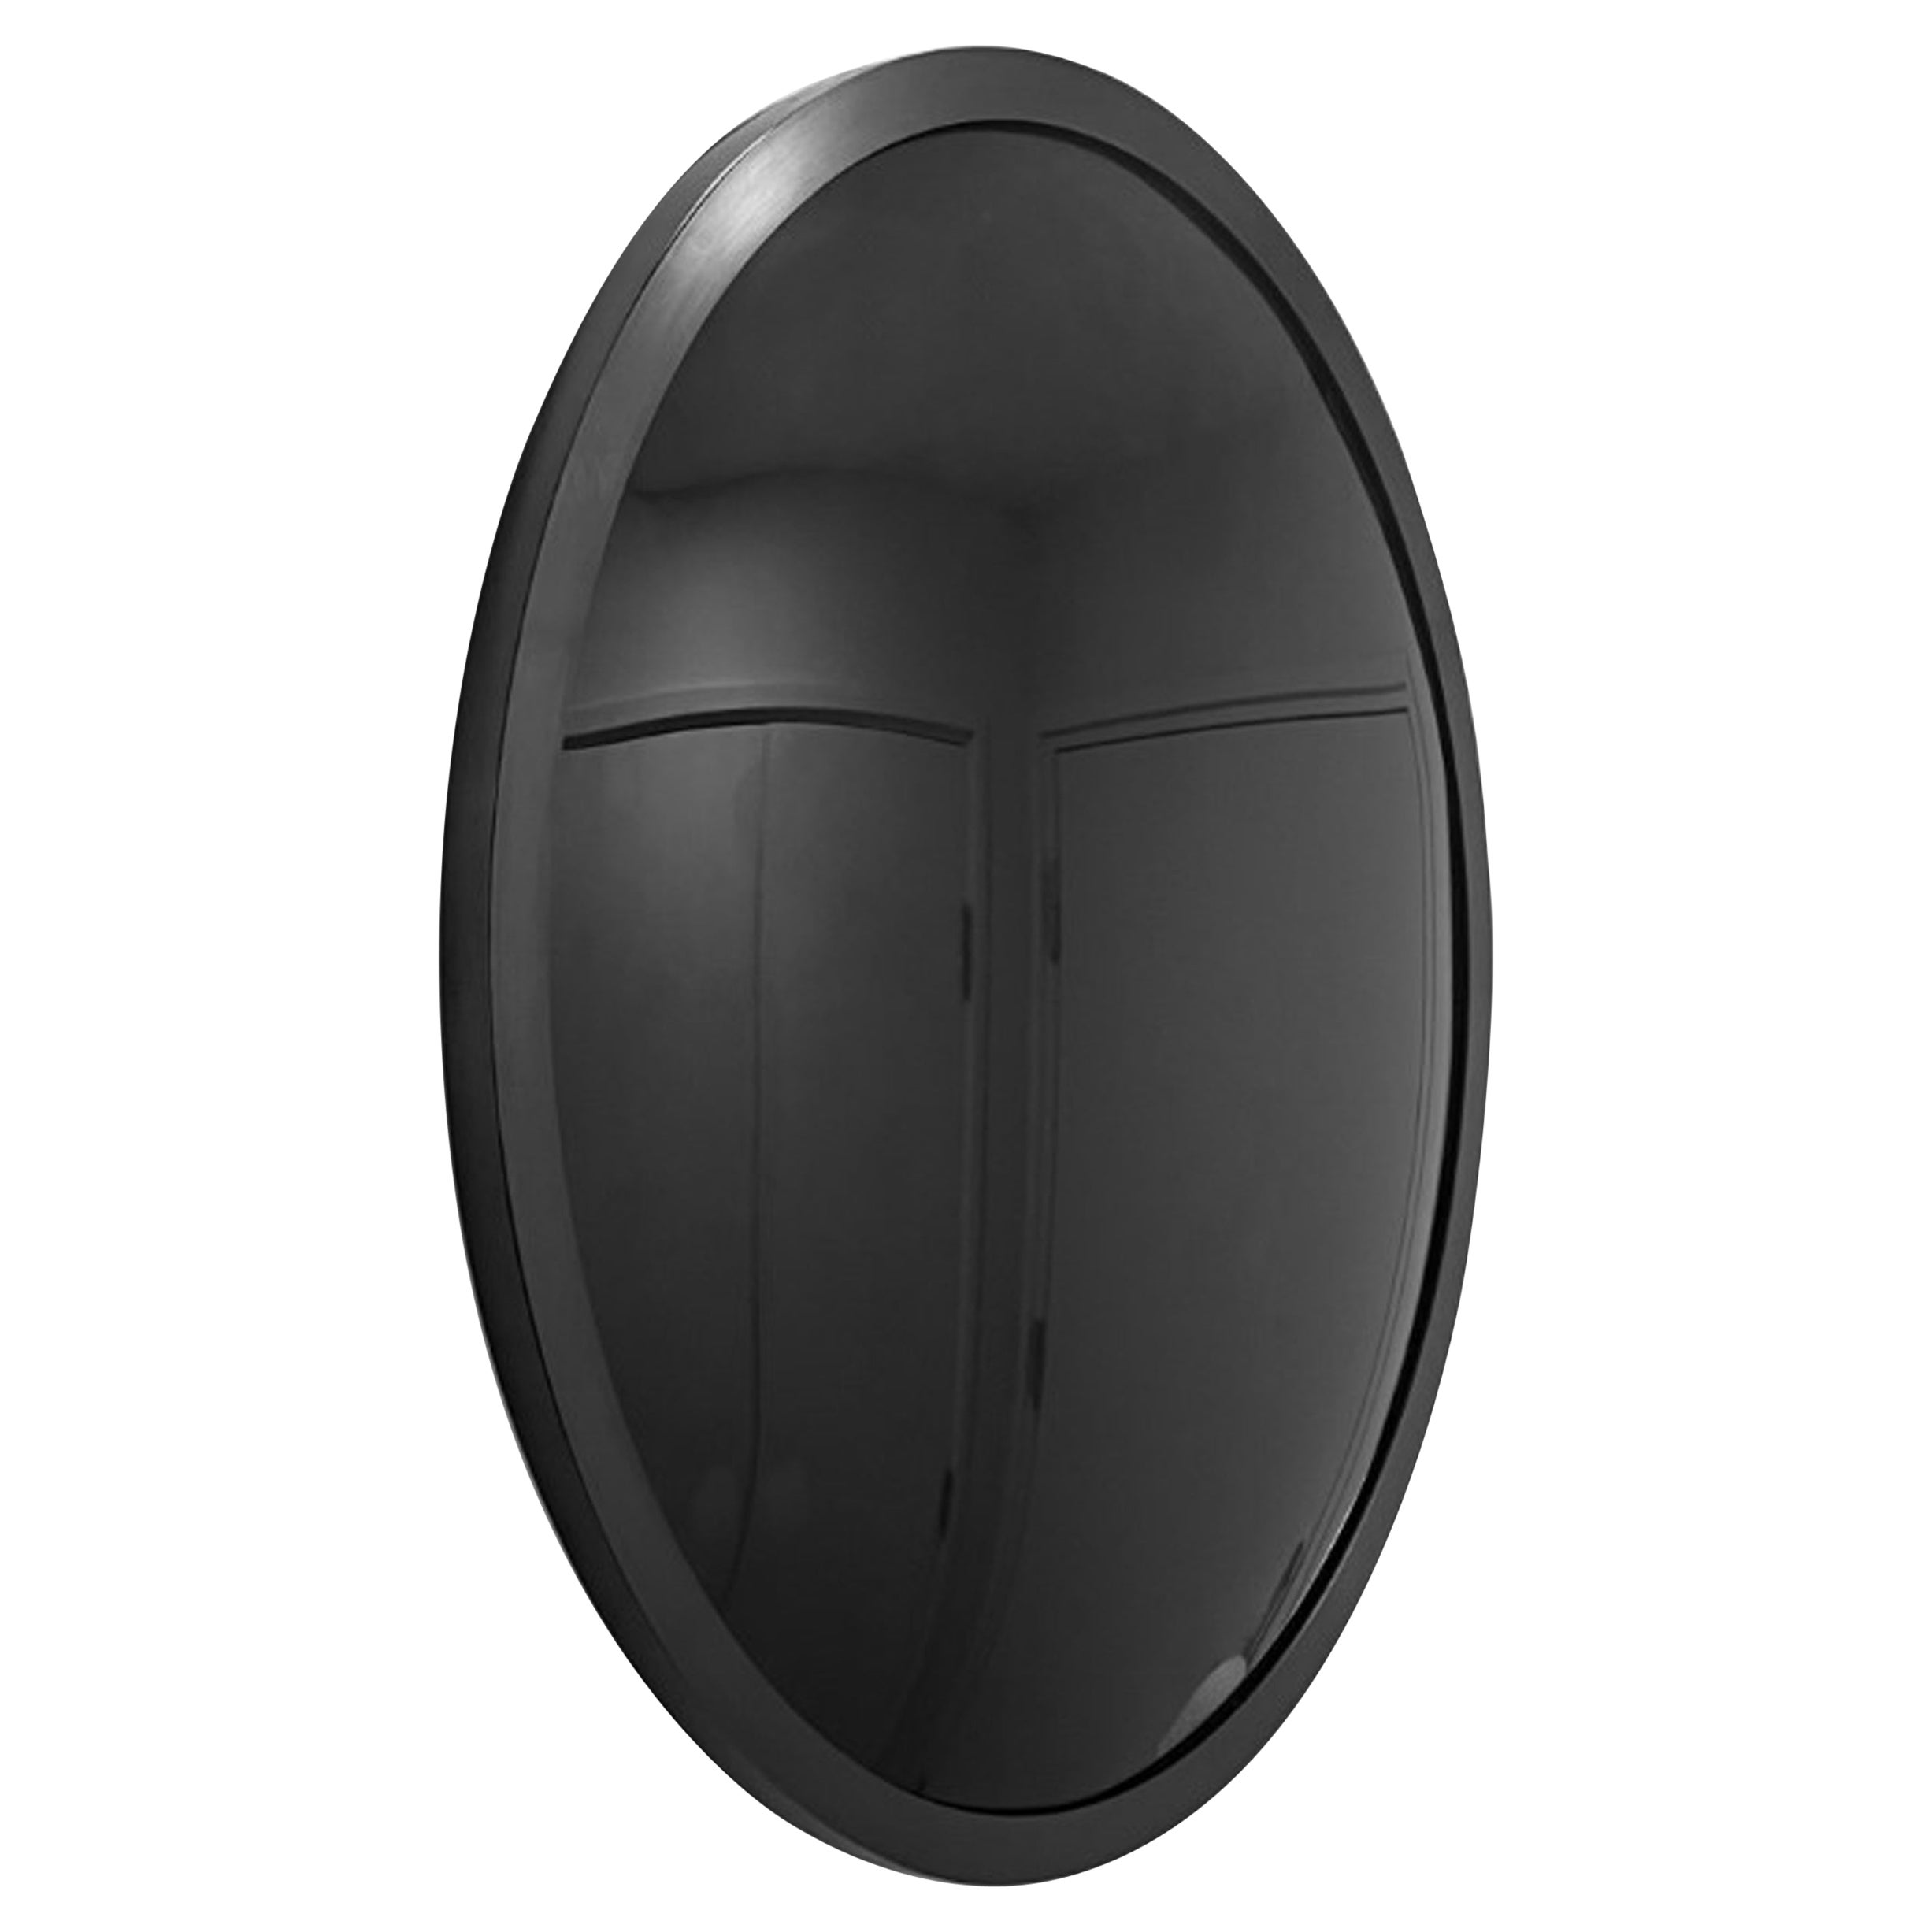 Orbis Round Black Tinted Convex Decorative Mirror, Blackened Metal Frame, Large For Sale